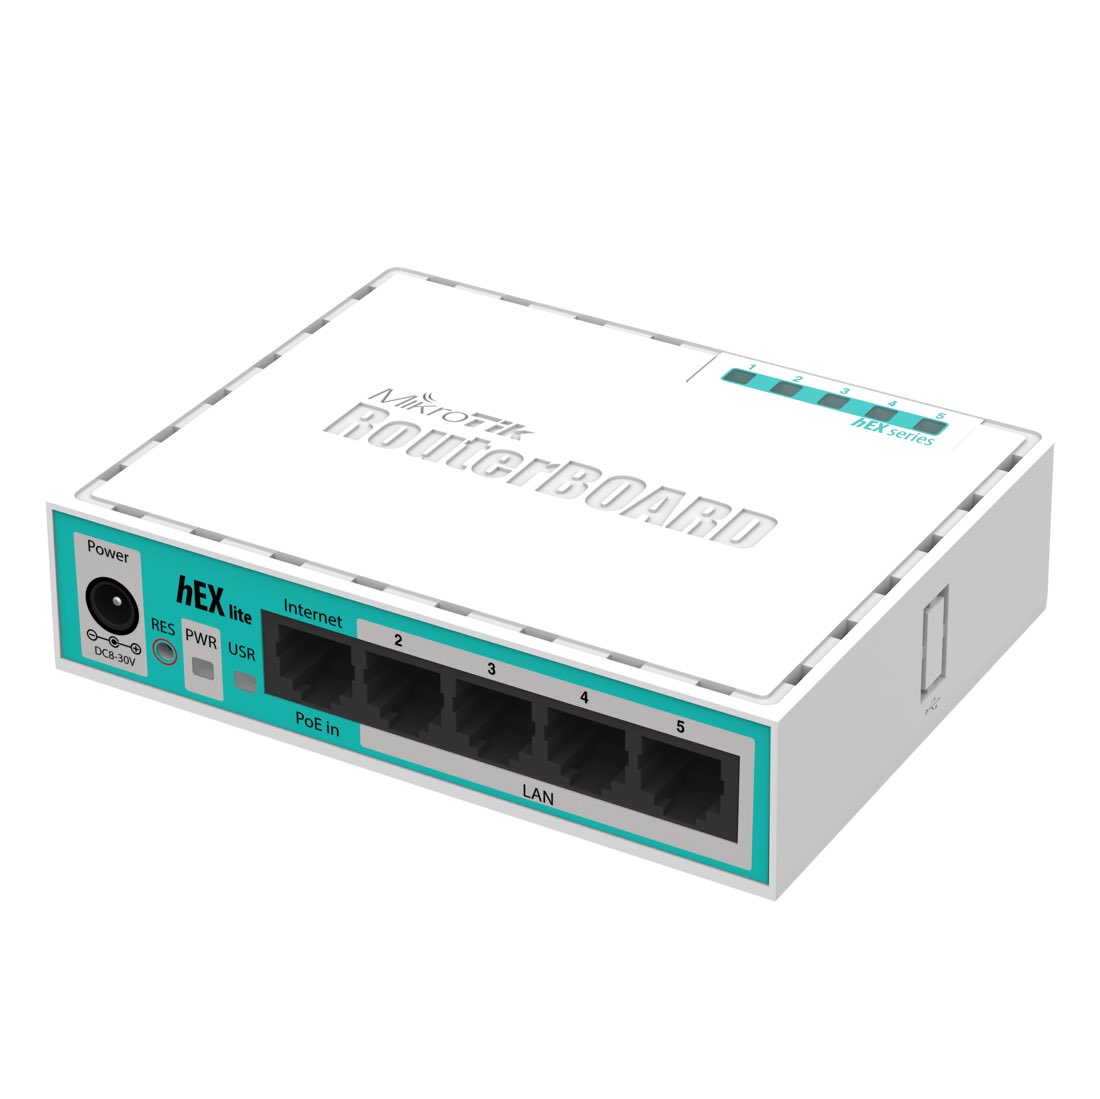 MIKROTIK  (hEX lite) RouterBoard, 5 Puertos Fast Ethernet